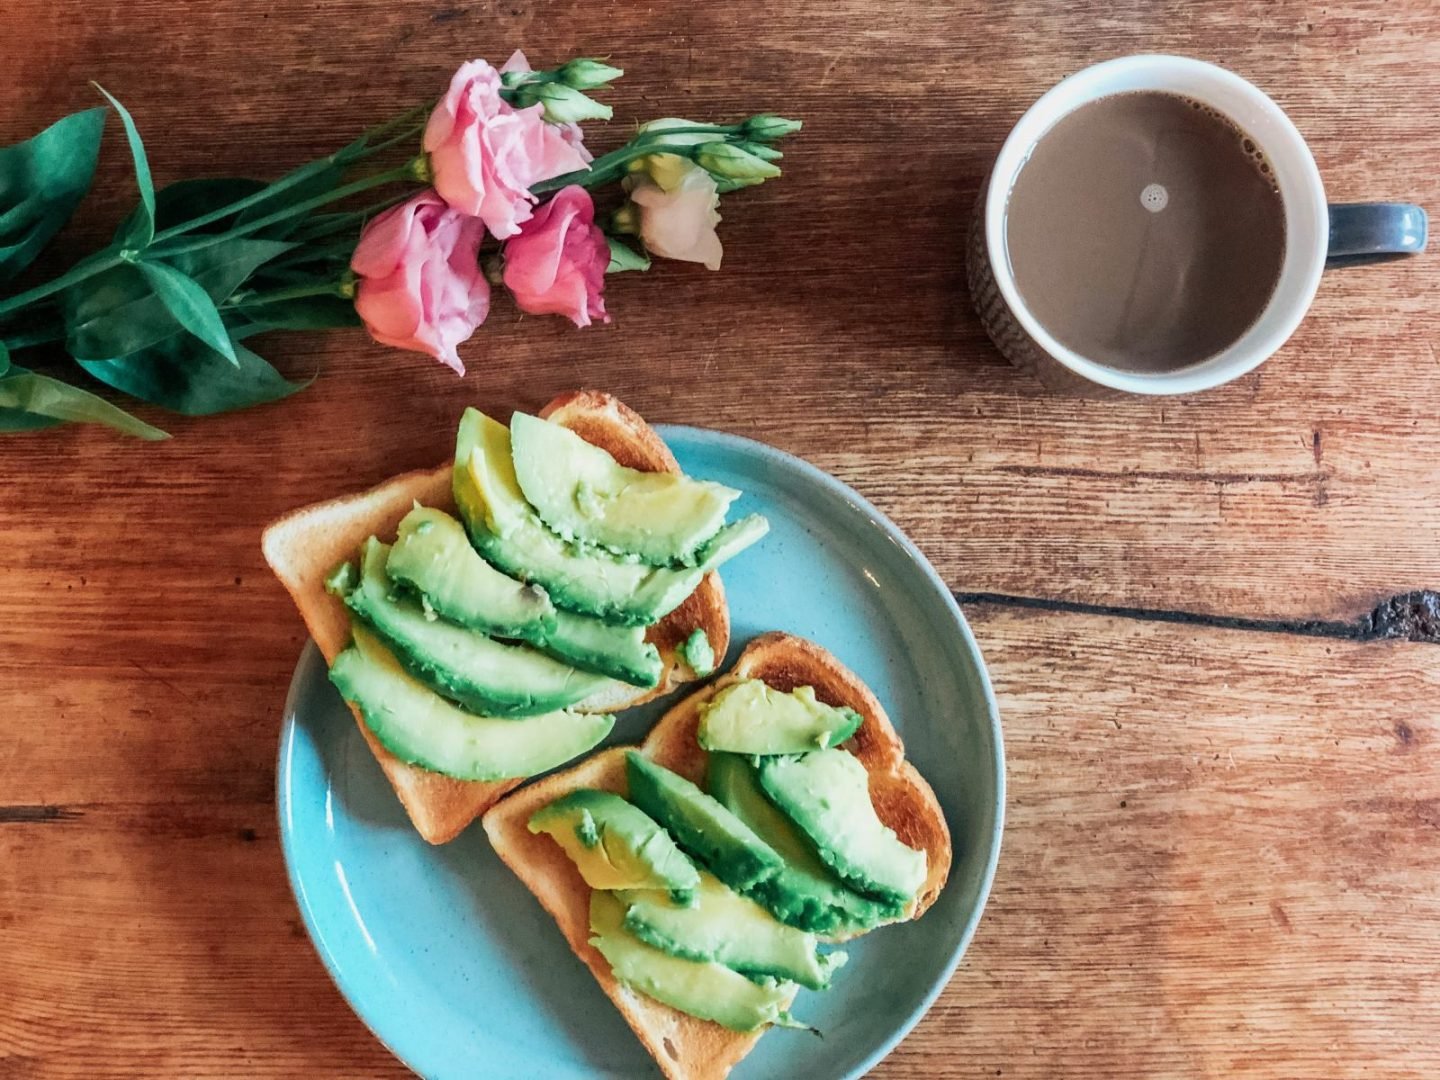 Avocado on toast for breakfast